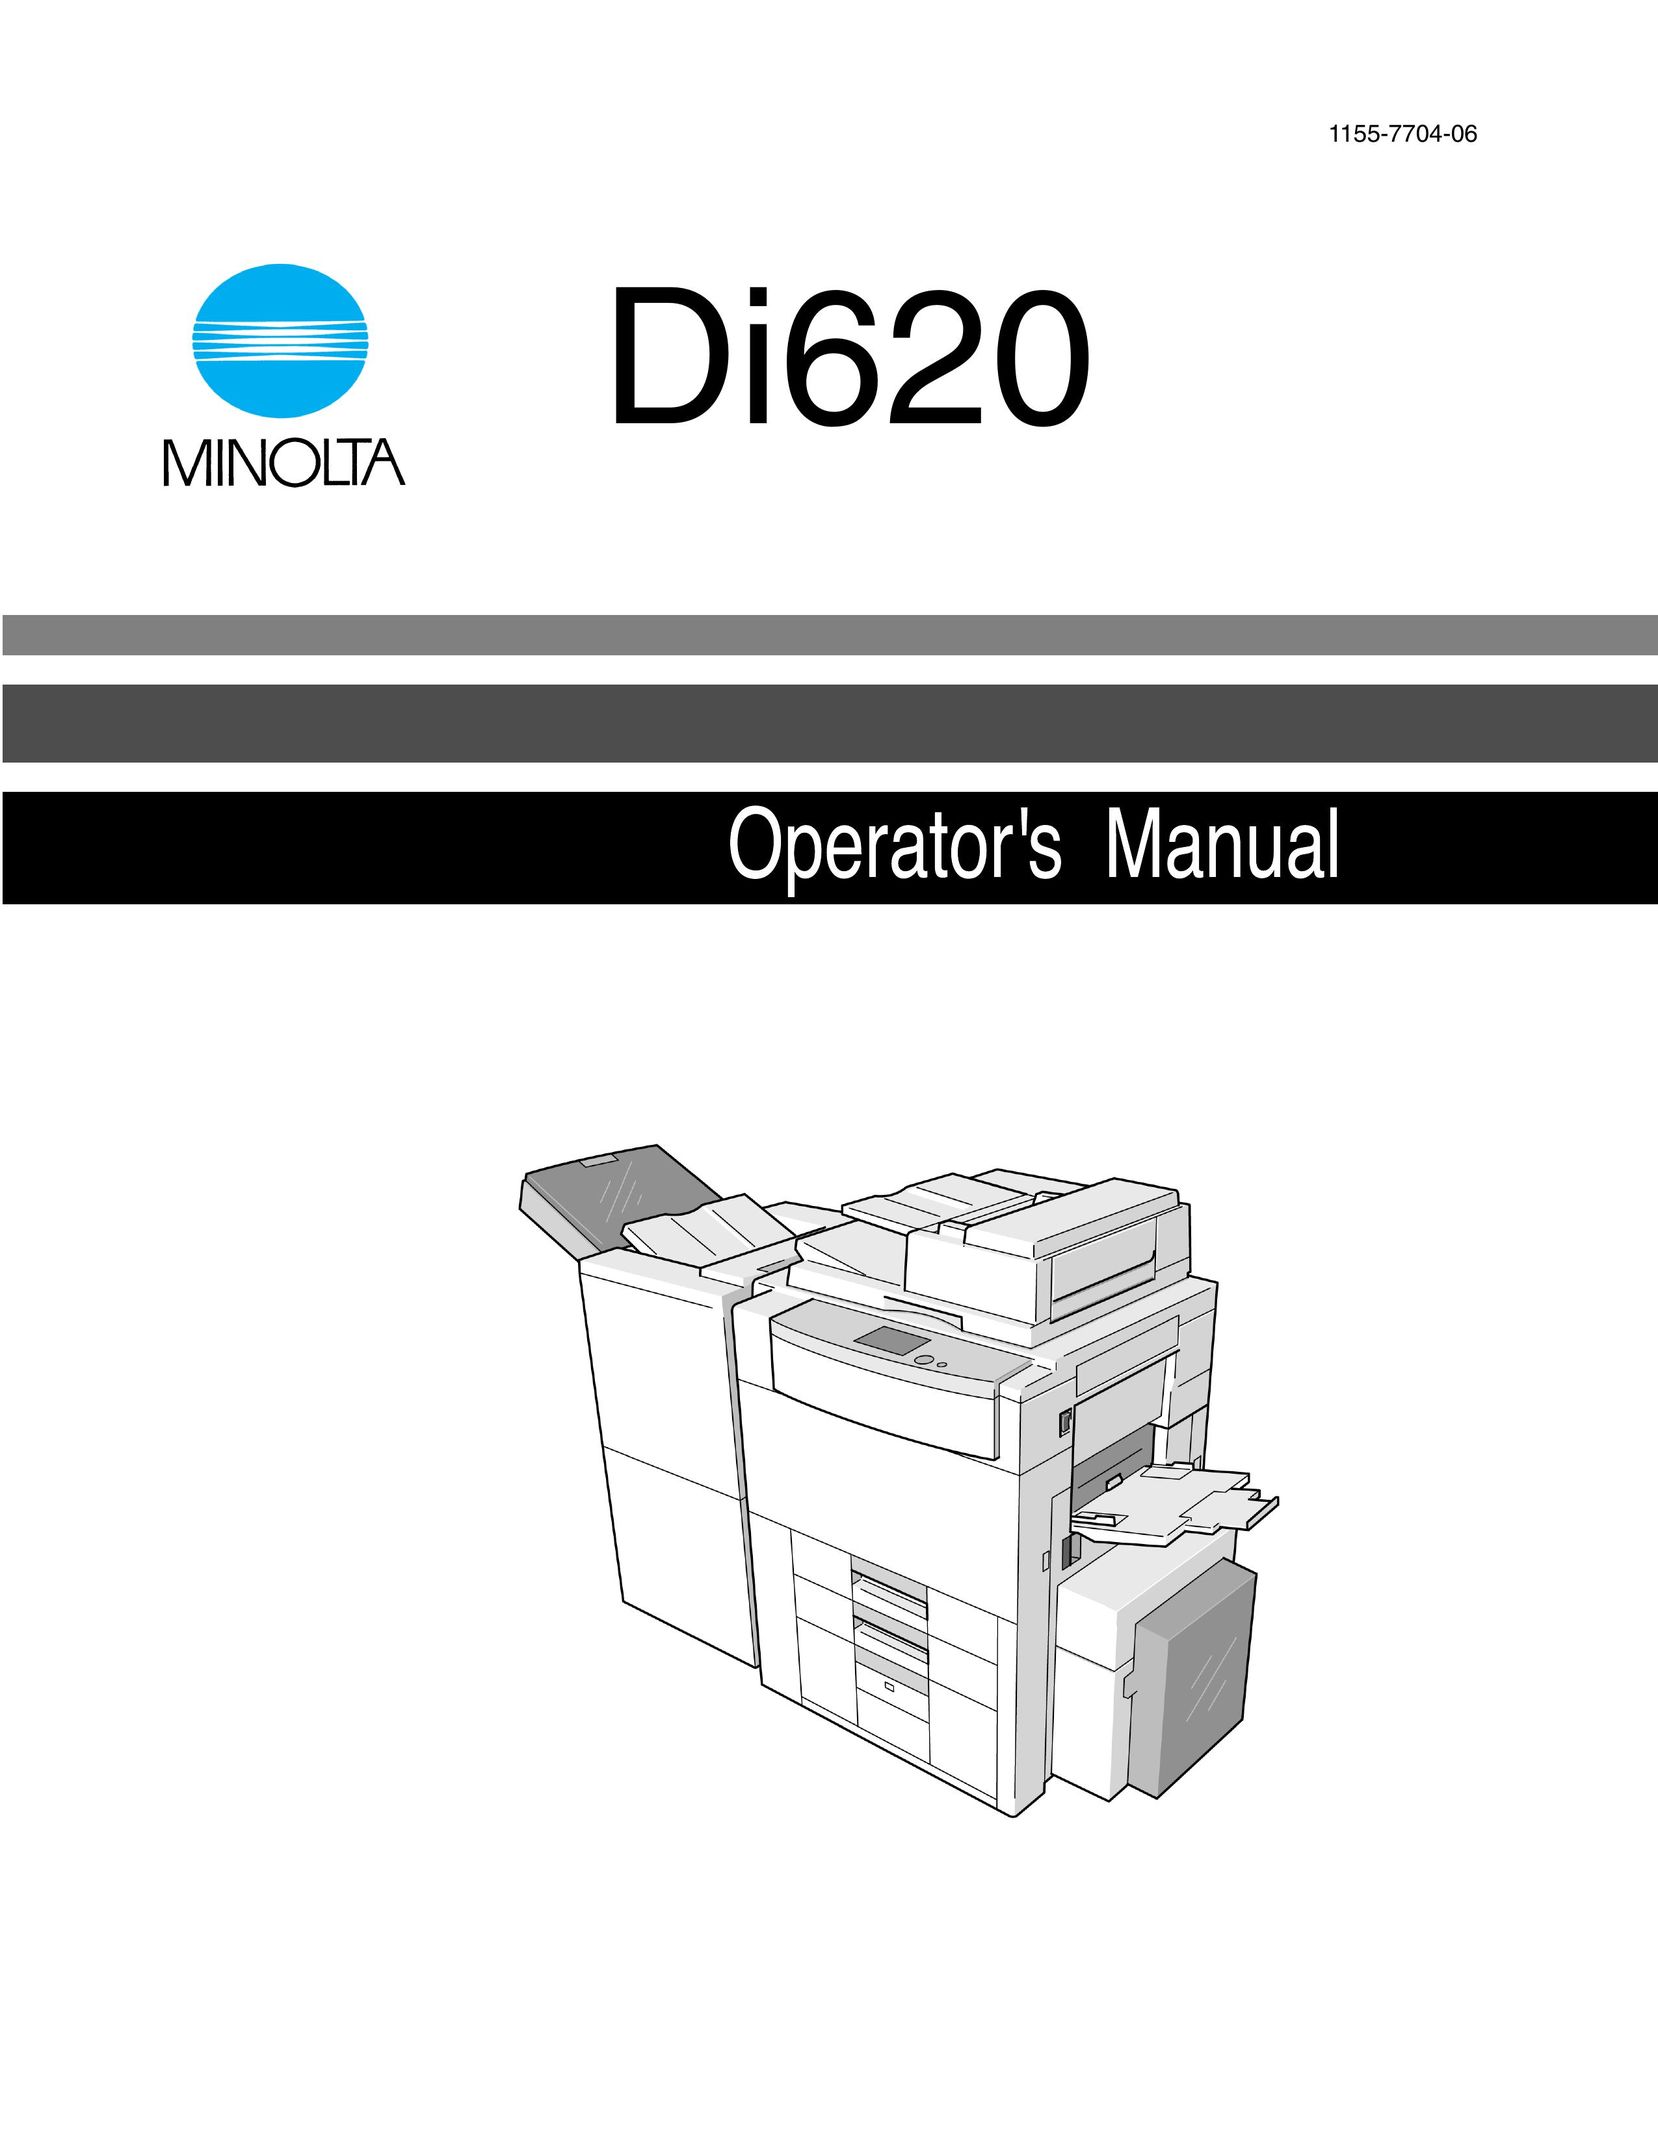 Minolta Di620 All in One Printer User Manual